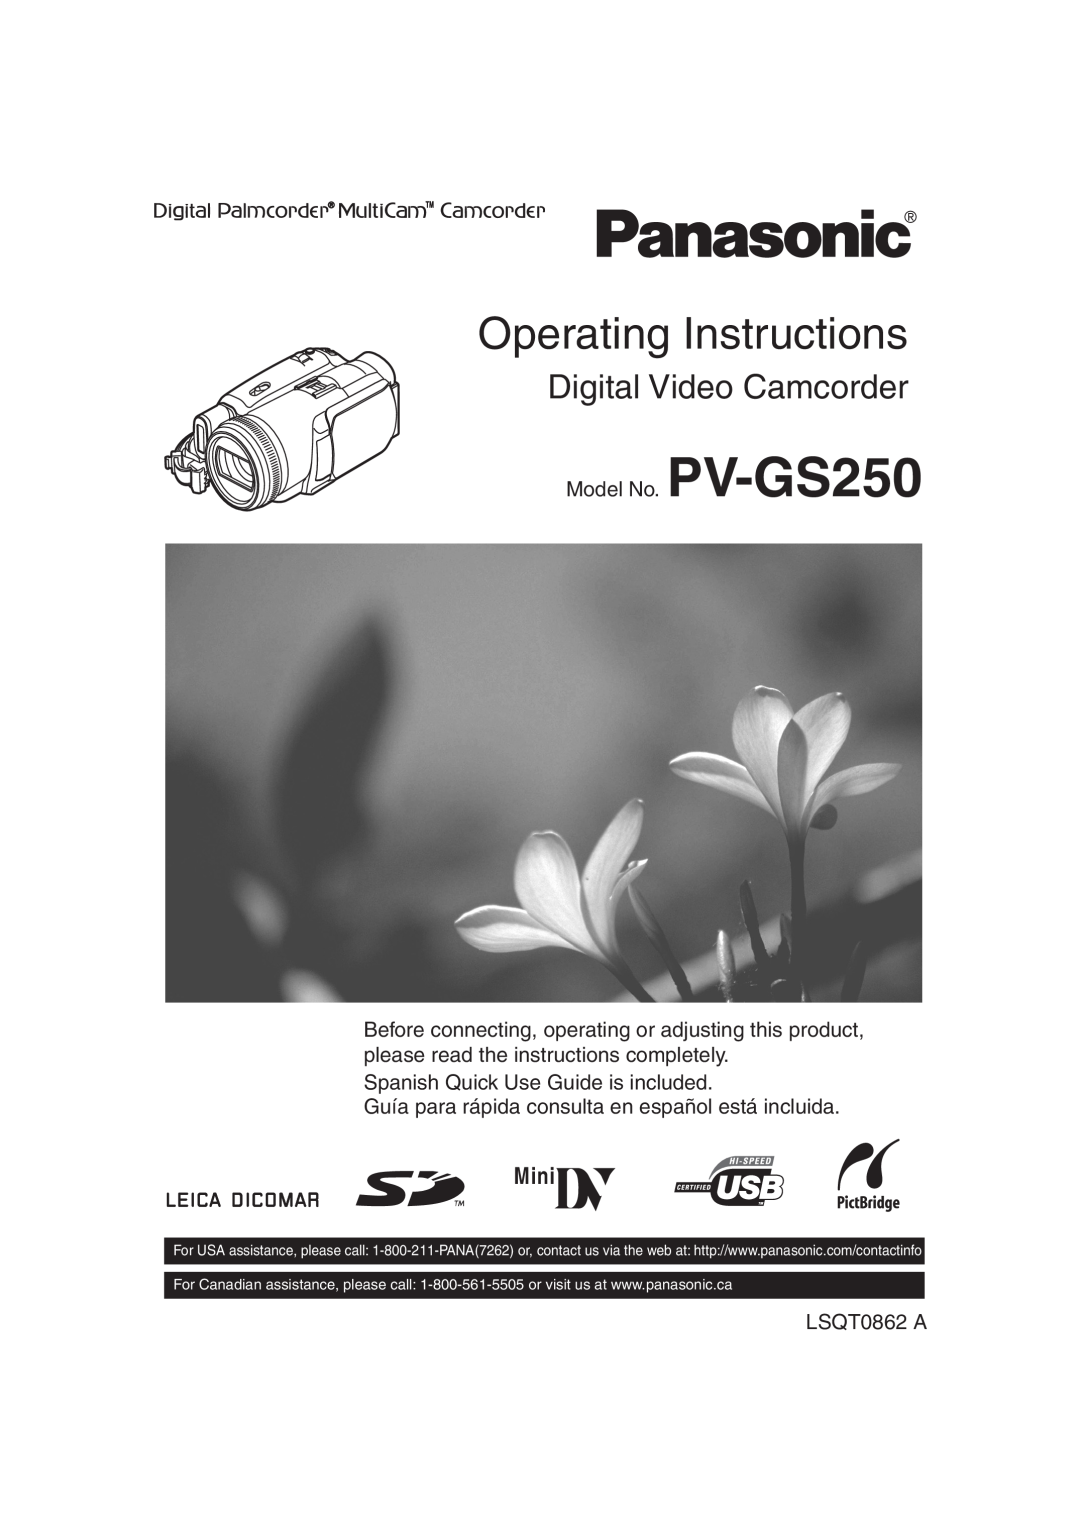 Panasonic PV-GS250 operating instructions Mini, Operating Instructions, Digital Video Camcorder 